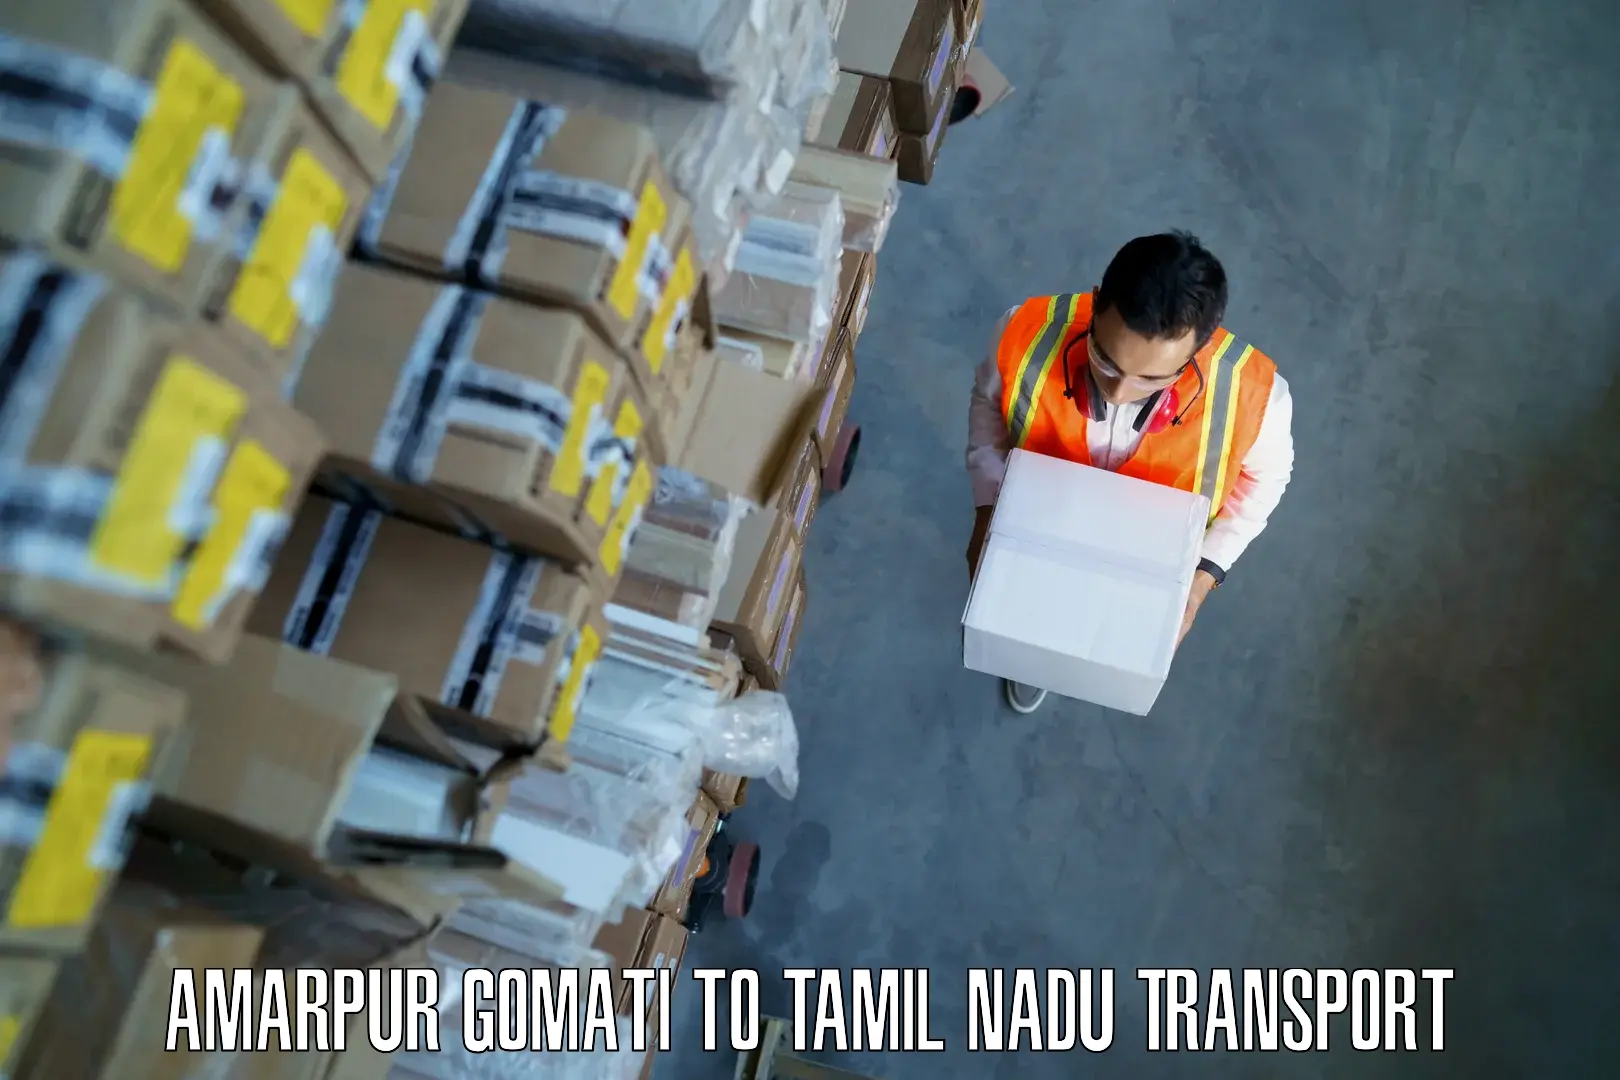 Goods delivery service Amarpur Gomati to Paramakudi